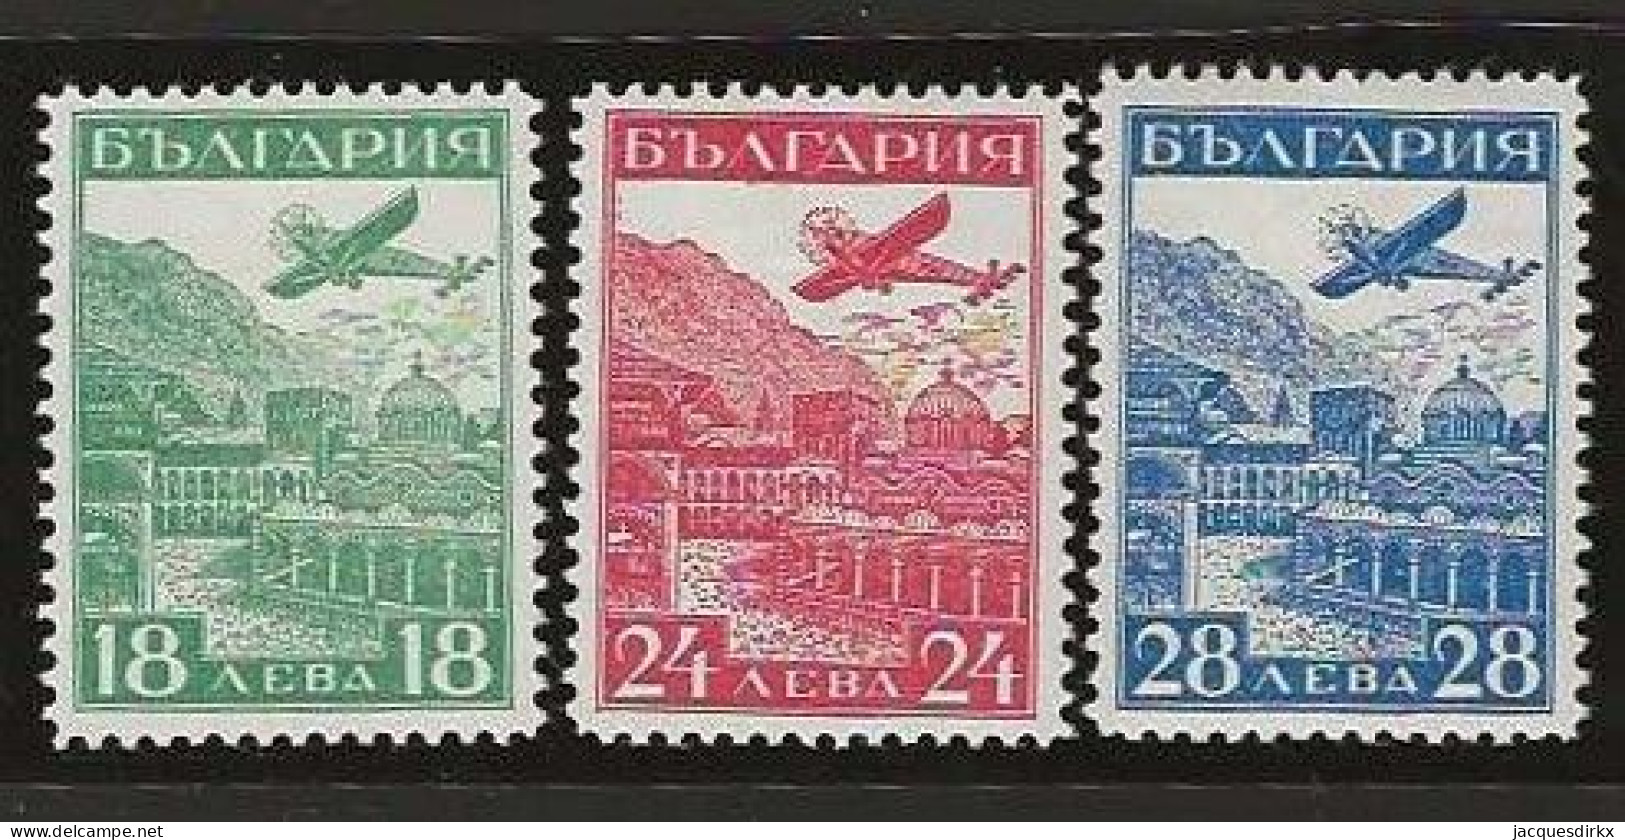 Bulgaria      .  Y&T      .  Airmail  12/14        .   *      .     Mint-hinged - Poste Aérienne